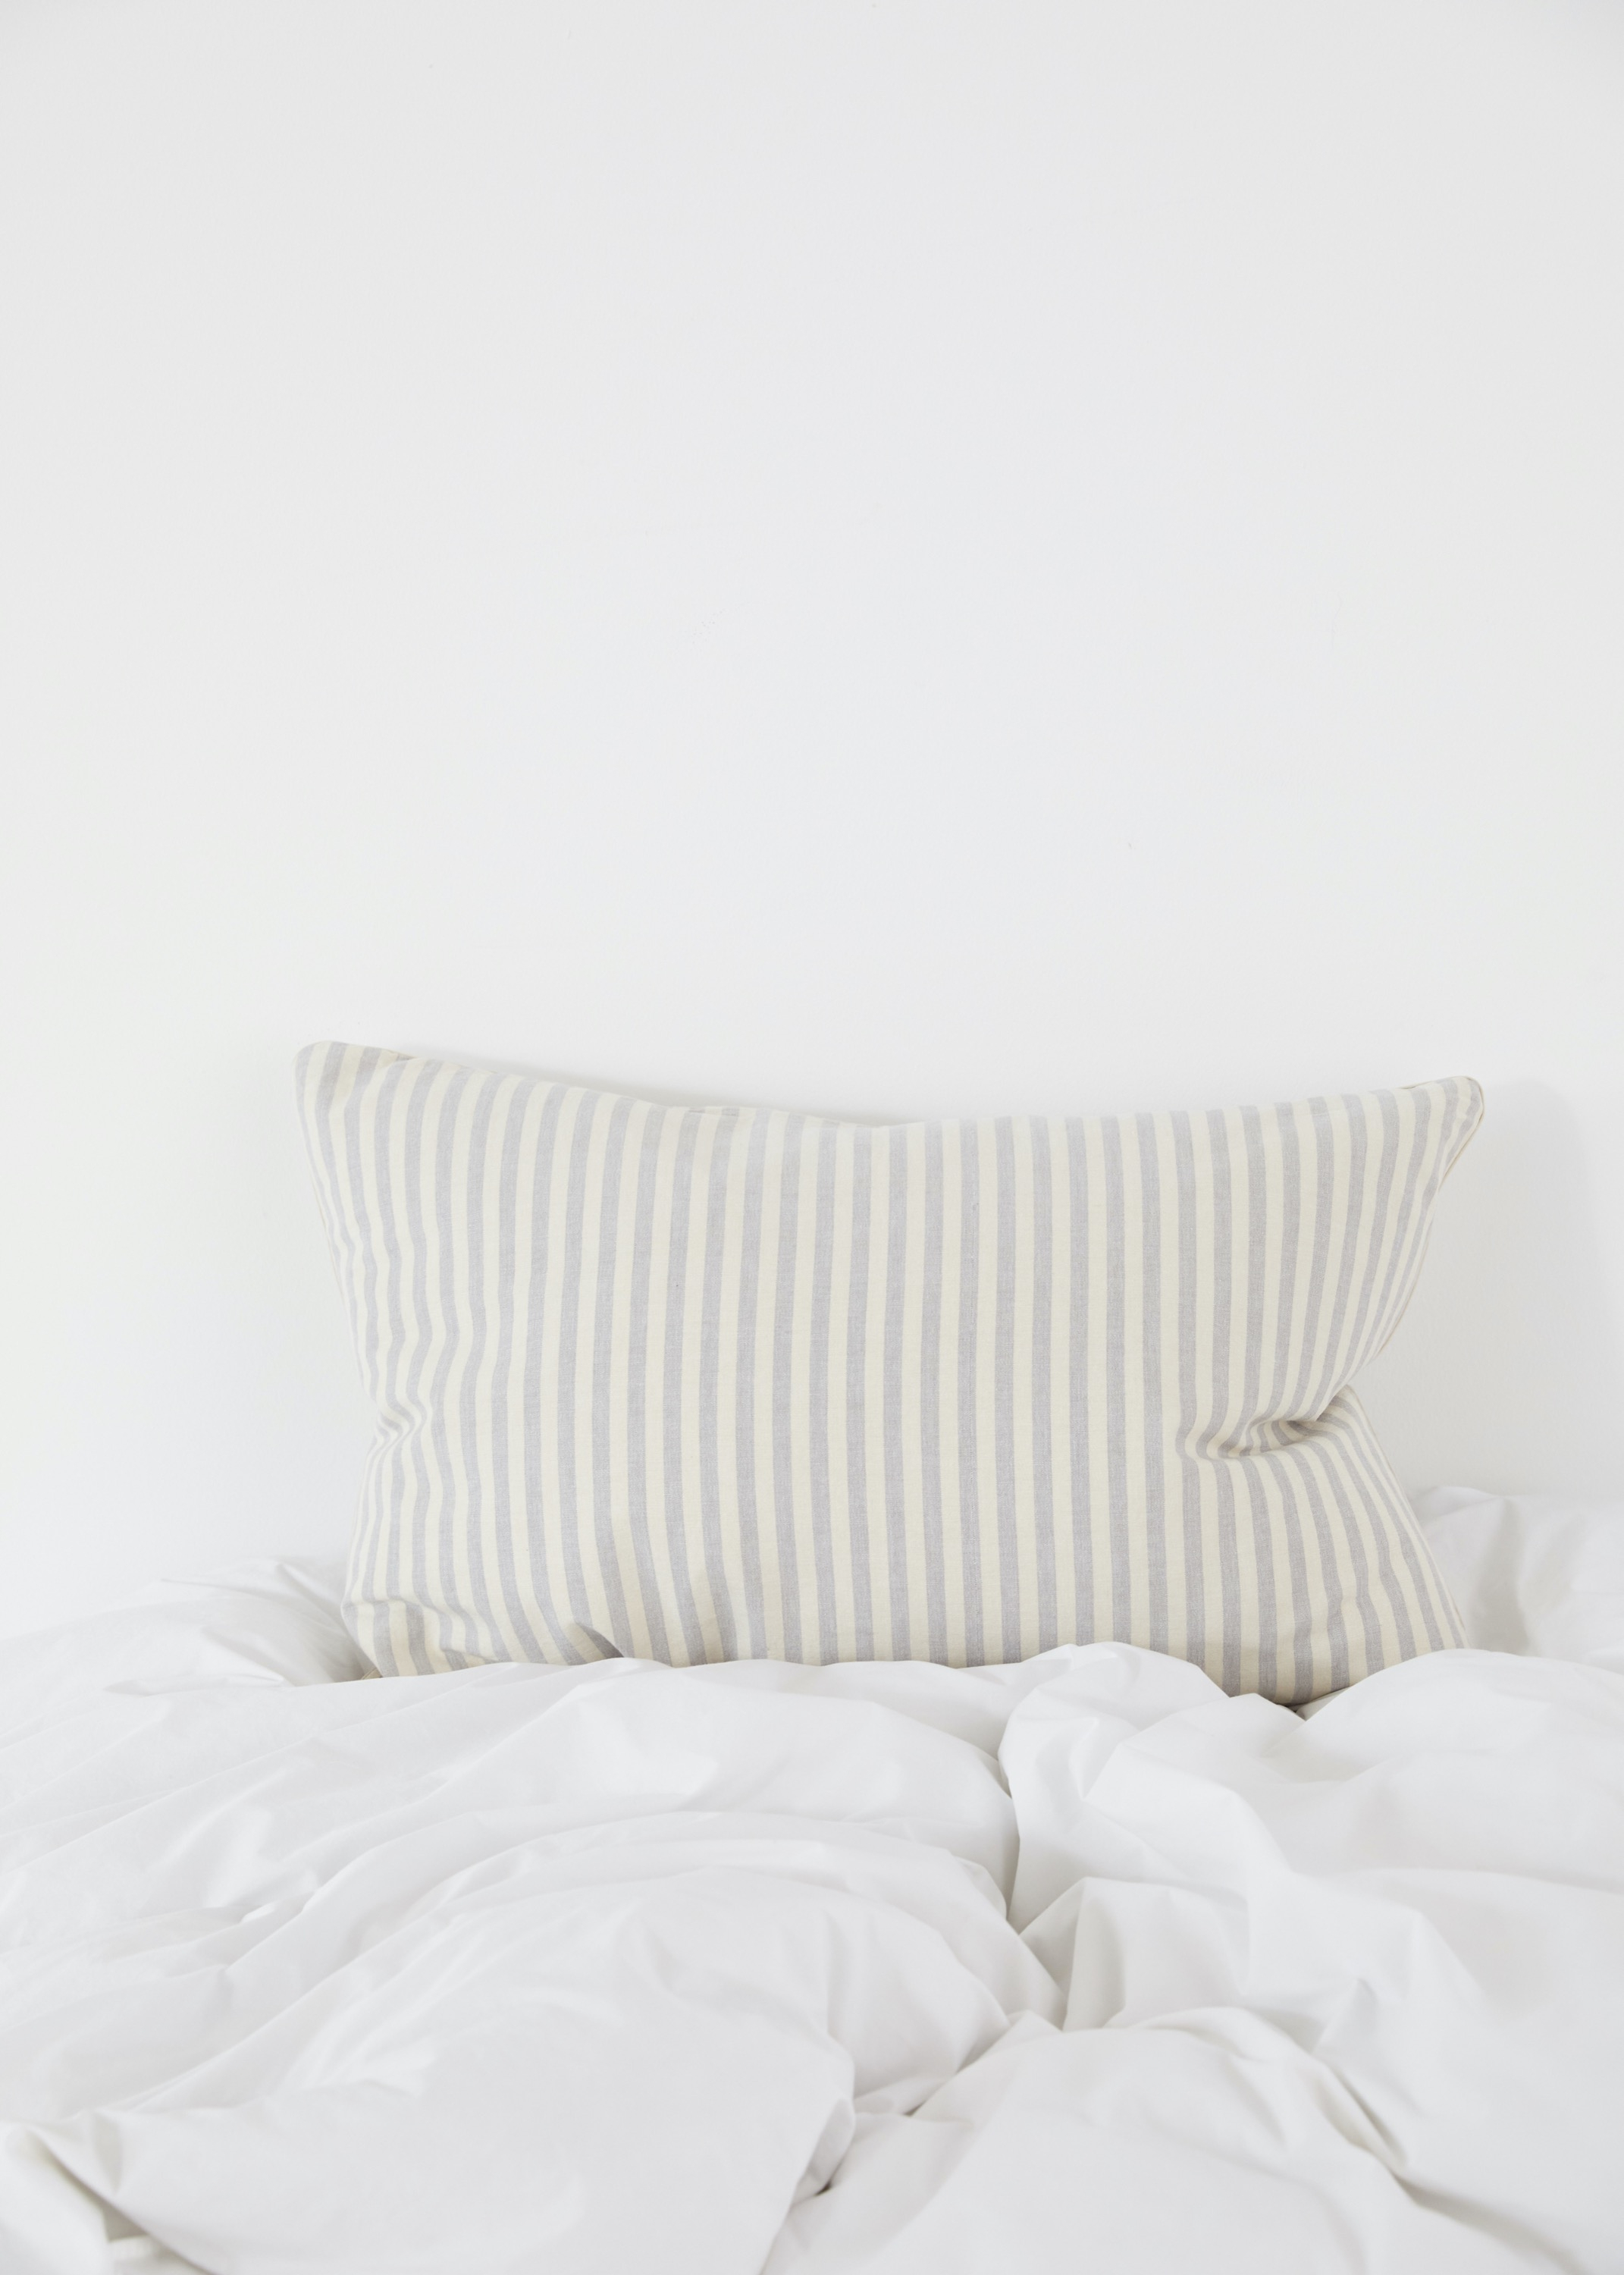 Cushions - Pillow Vacanza 50x80